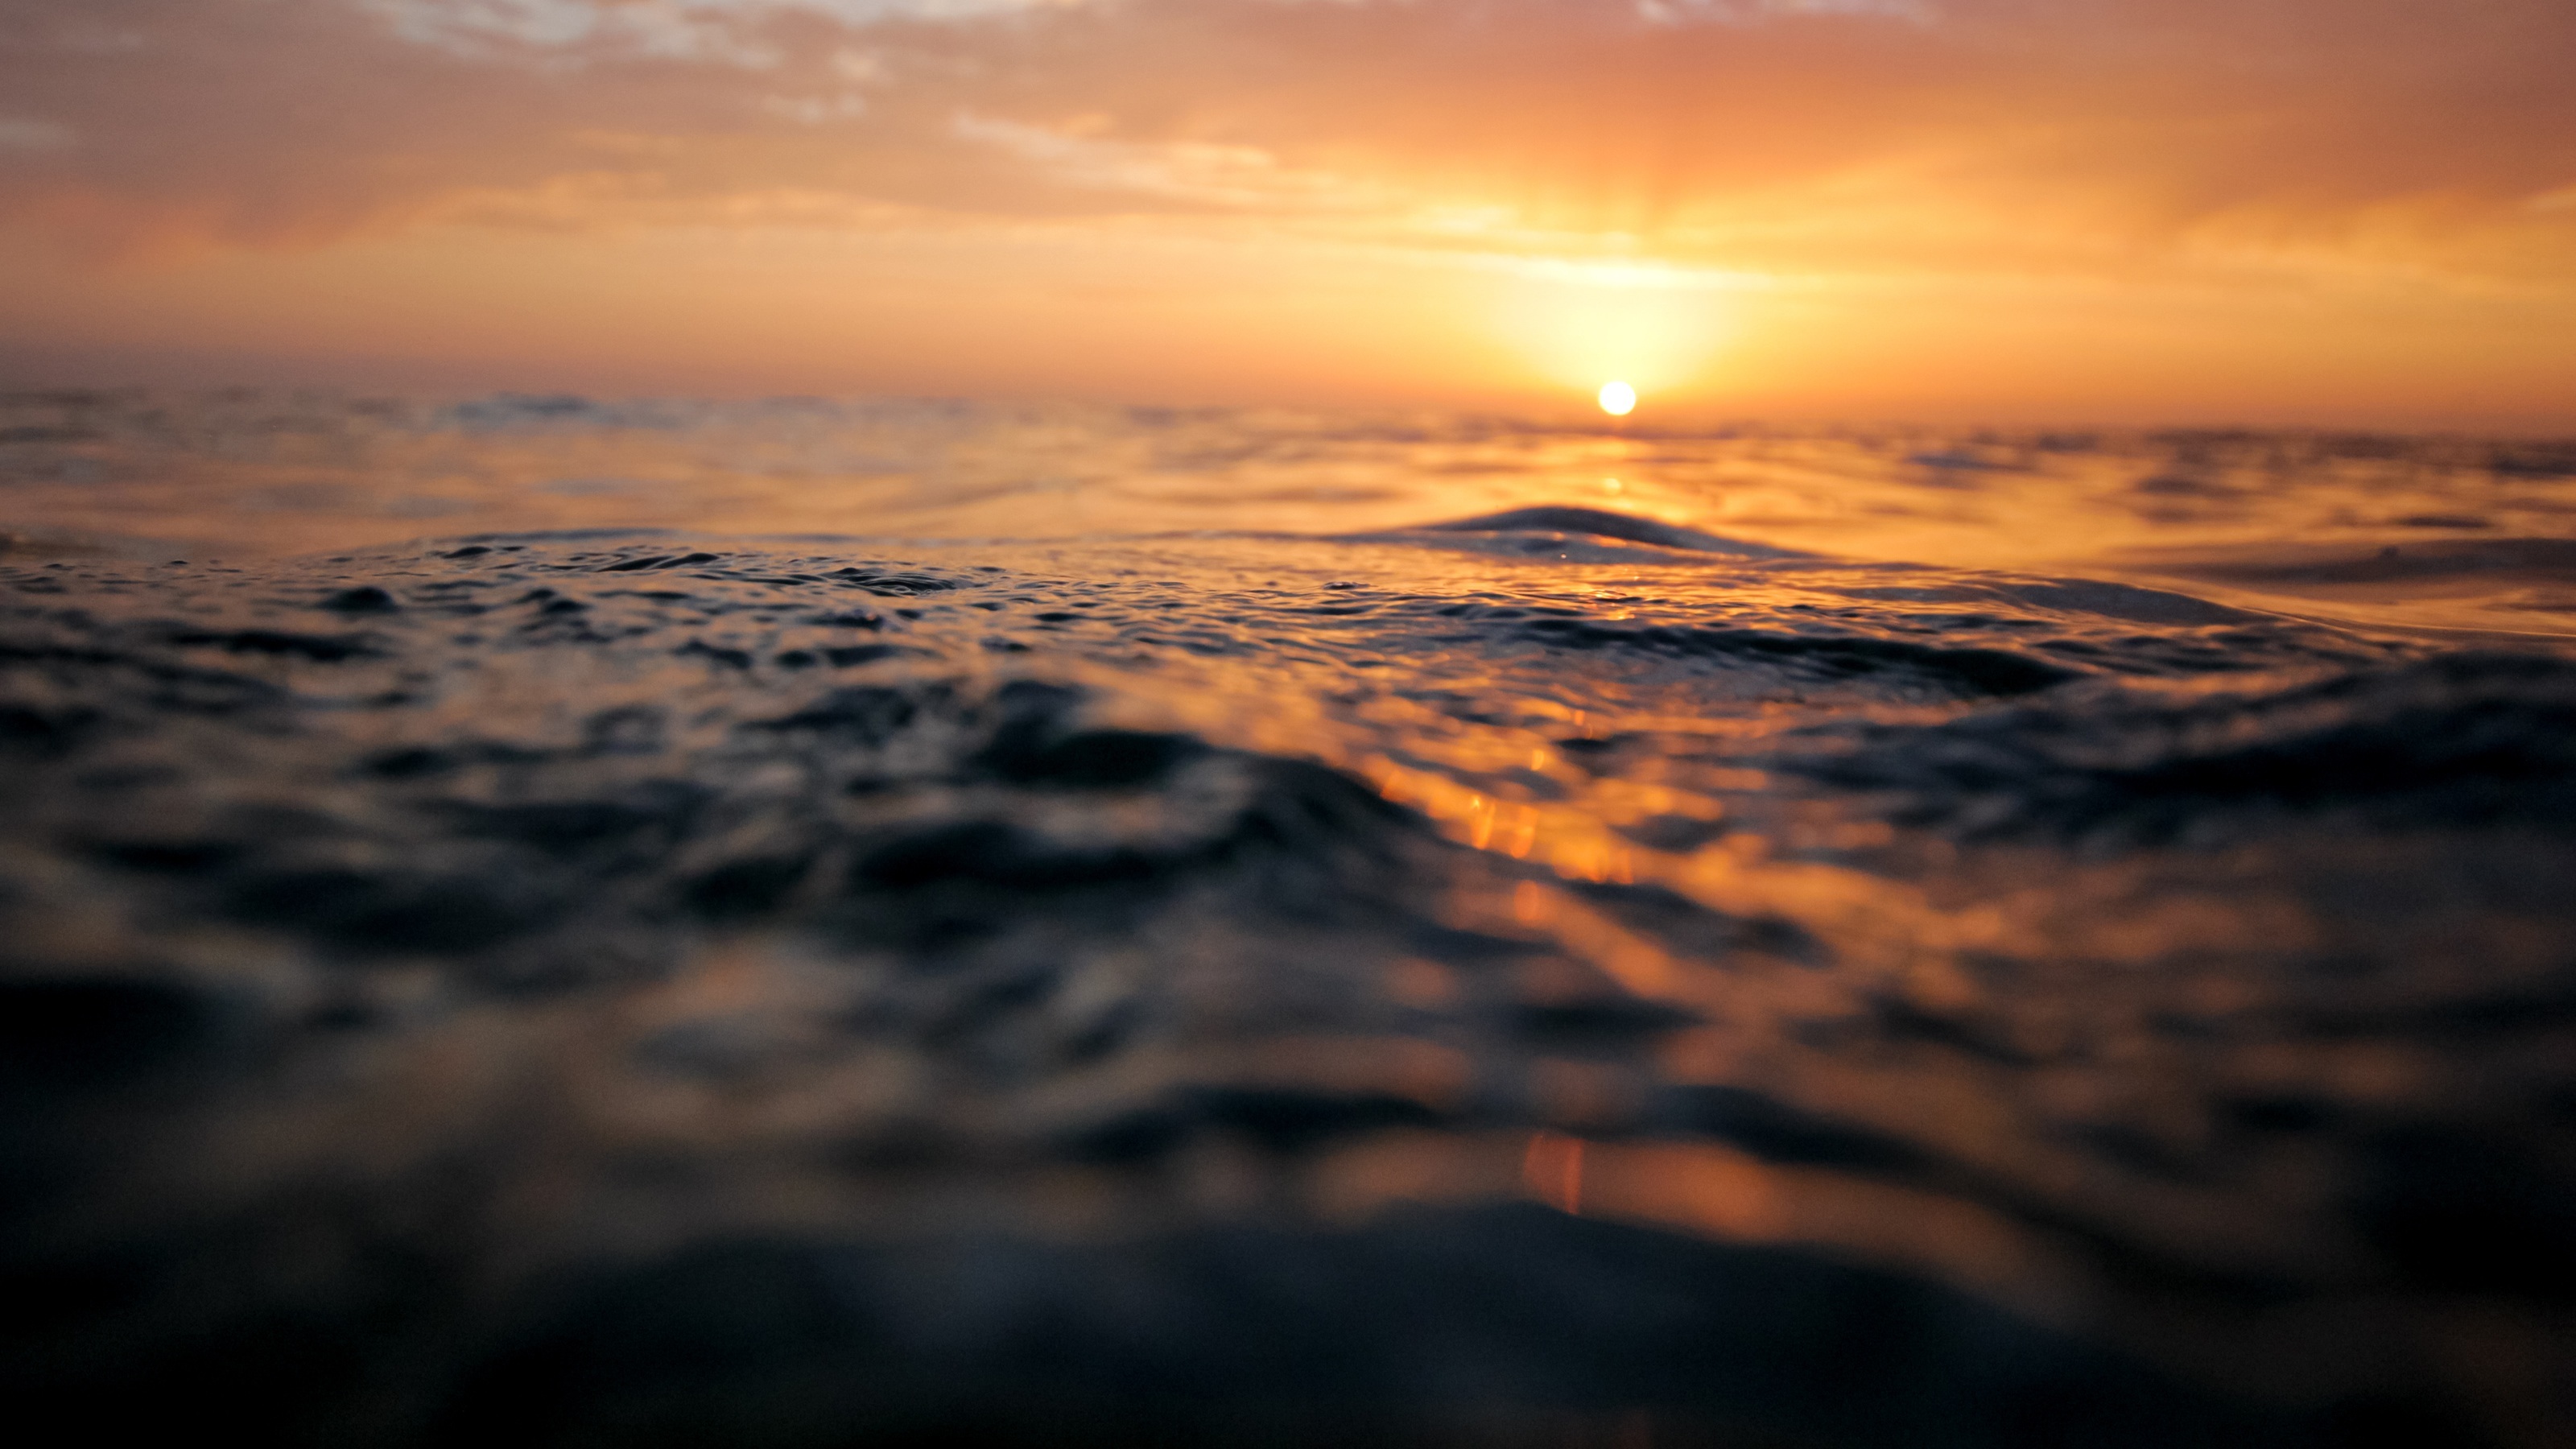 Бесплатное фото Морские волны на закате